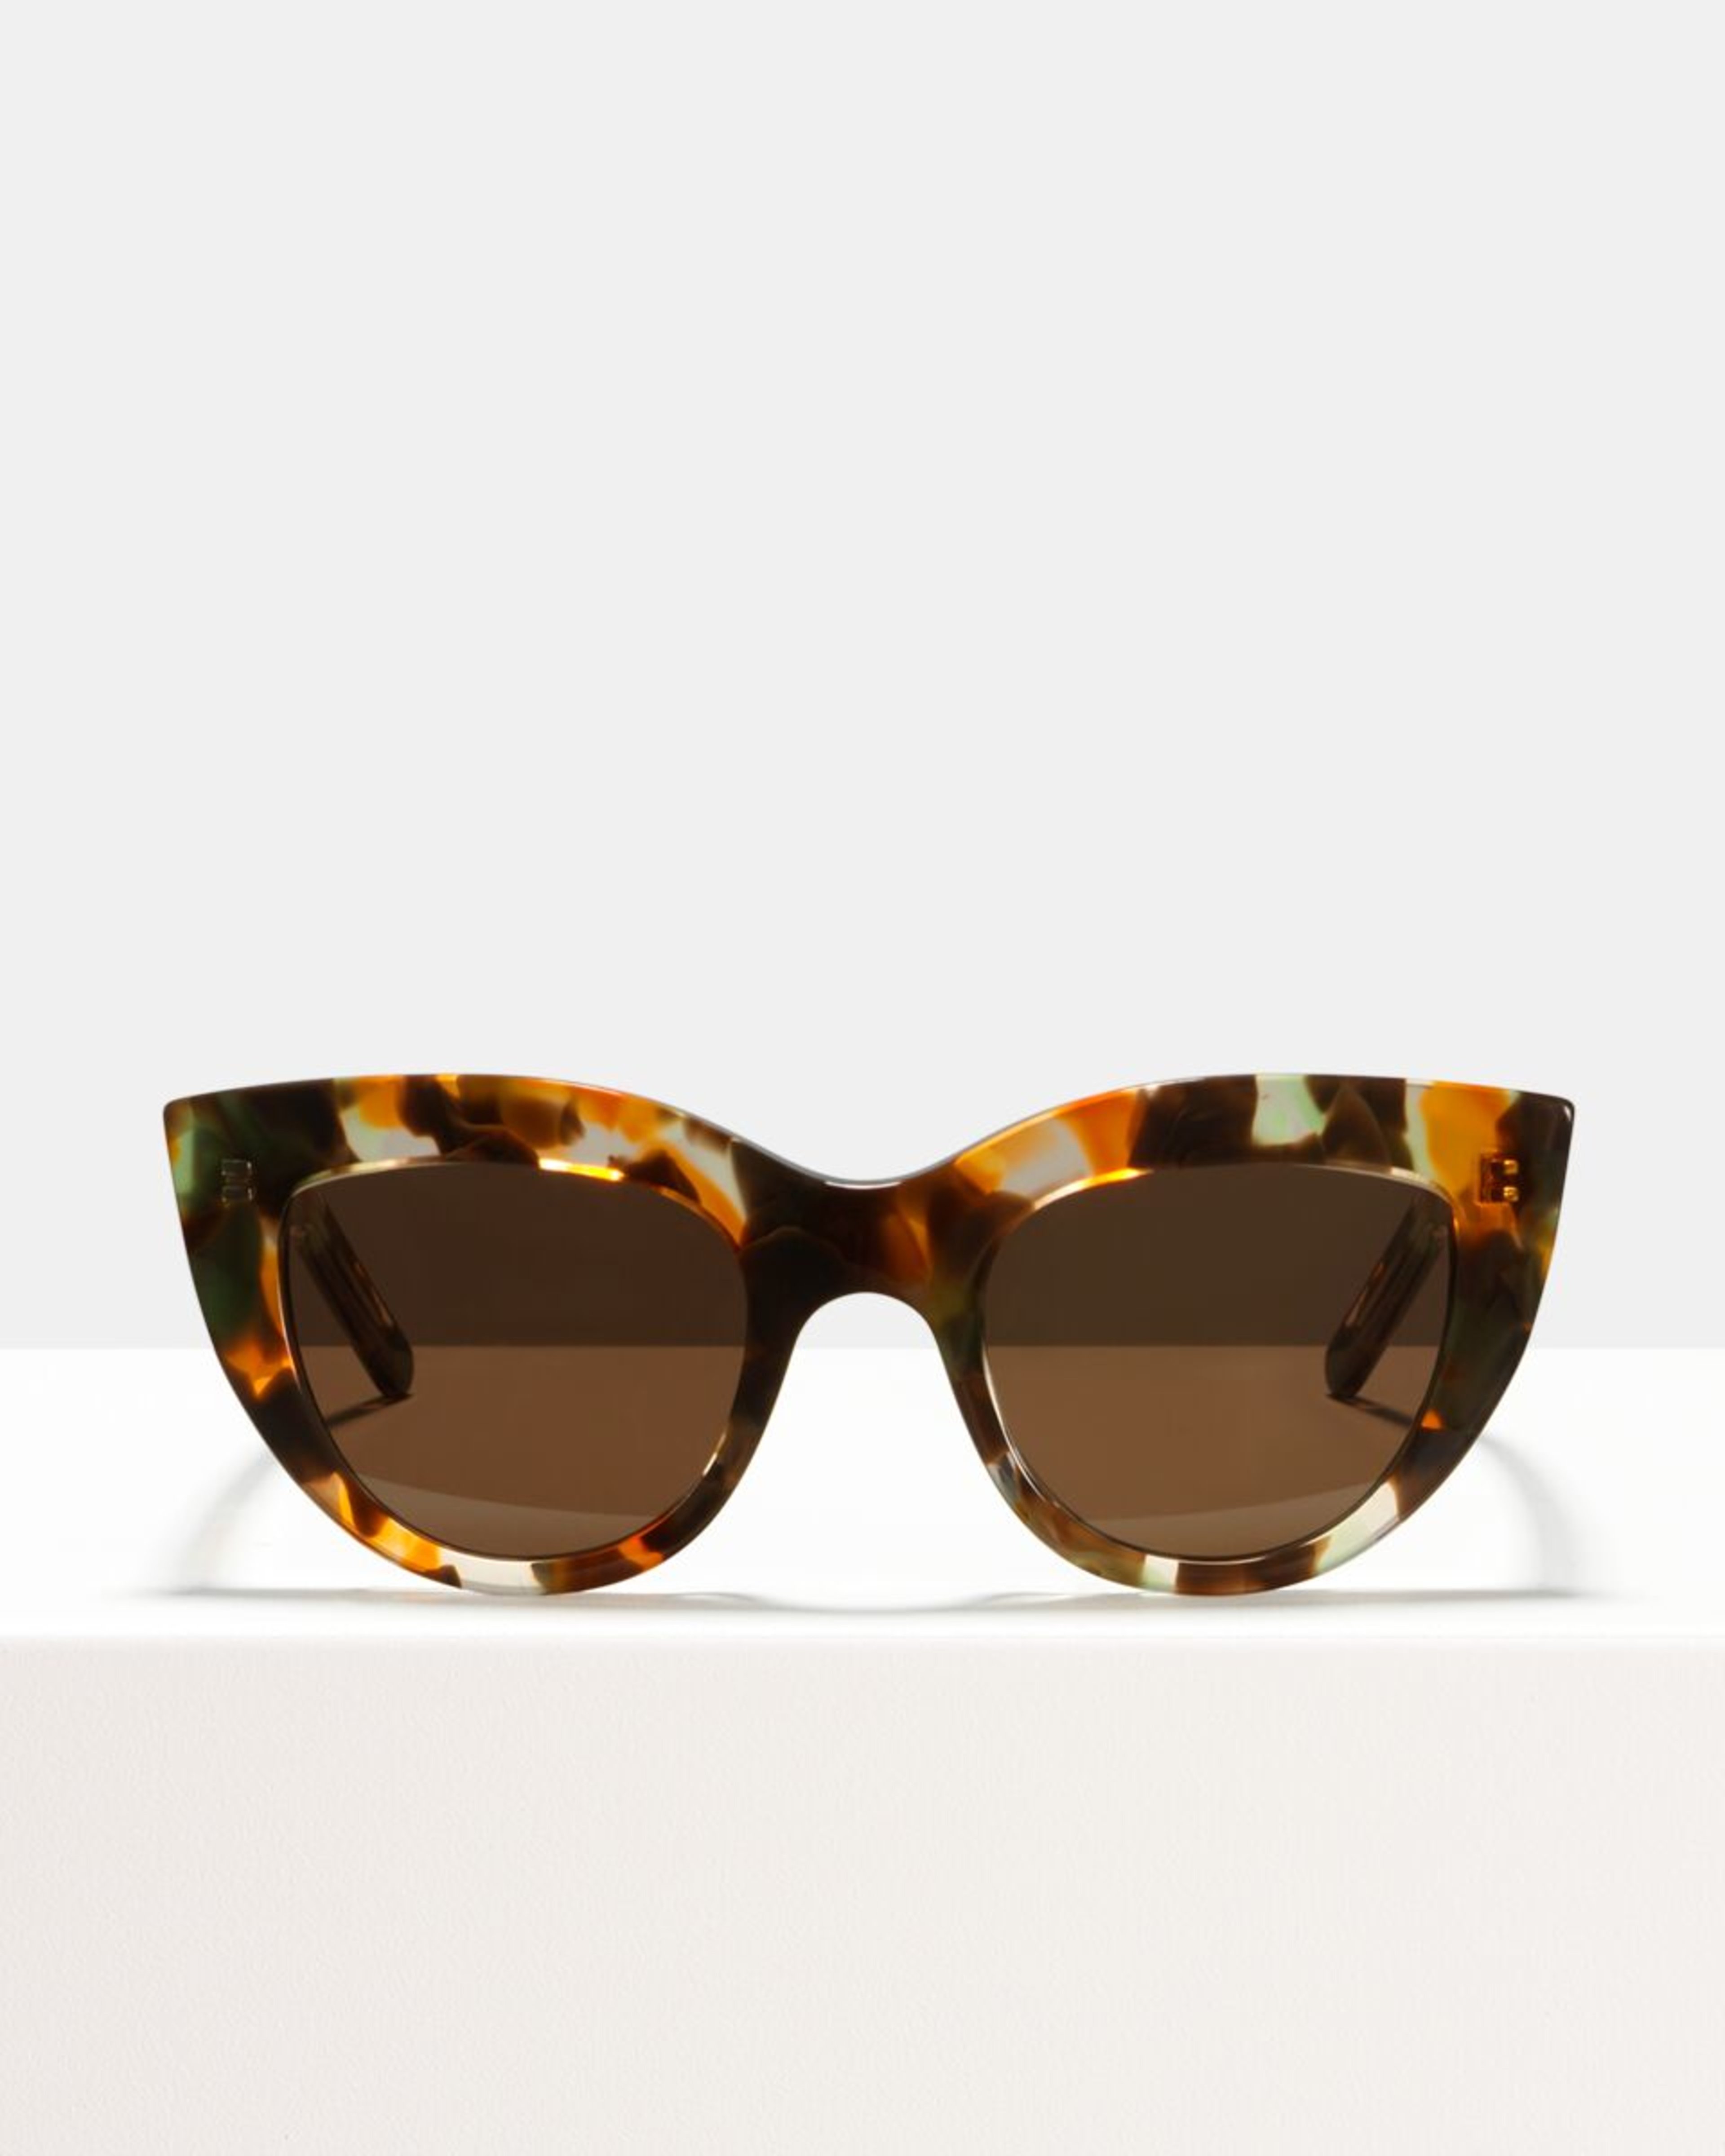 Ace & Tate Sunglasses |  Acetat in Braun, Grün, Orange